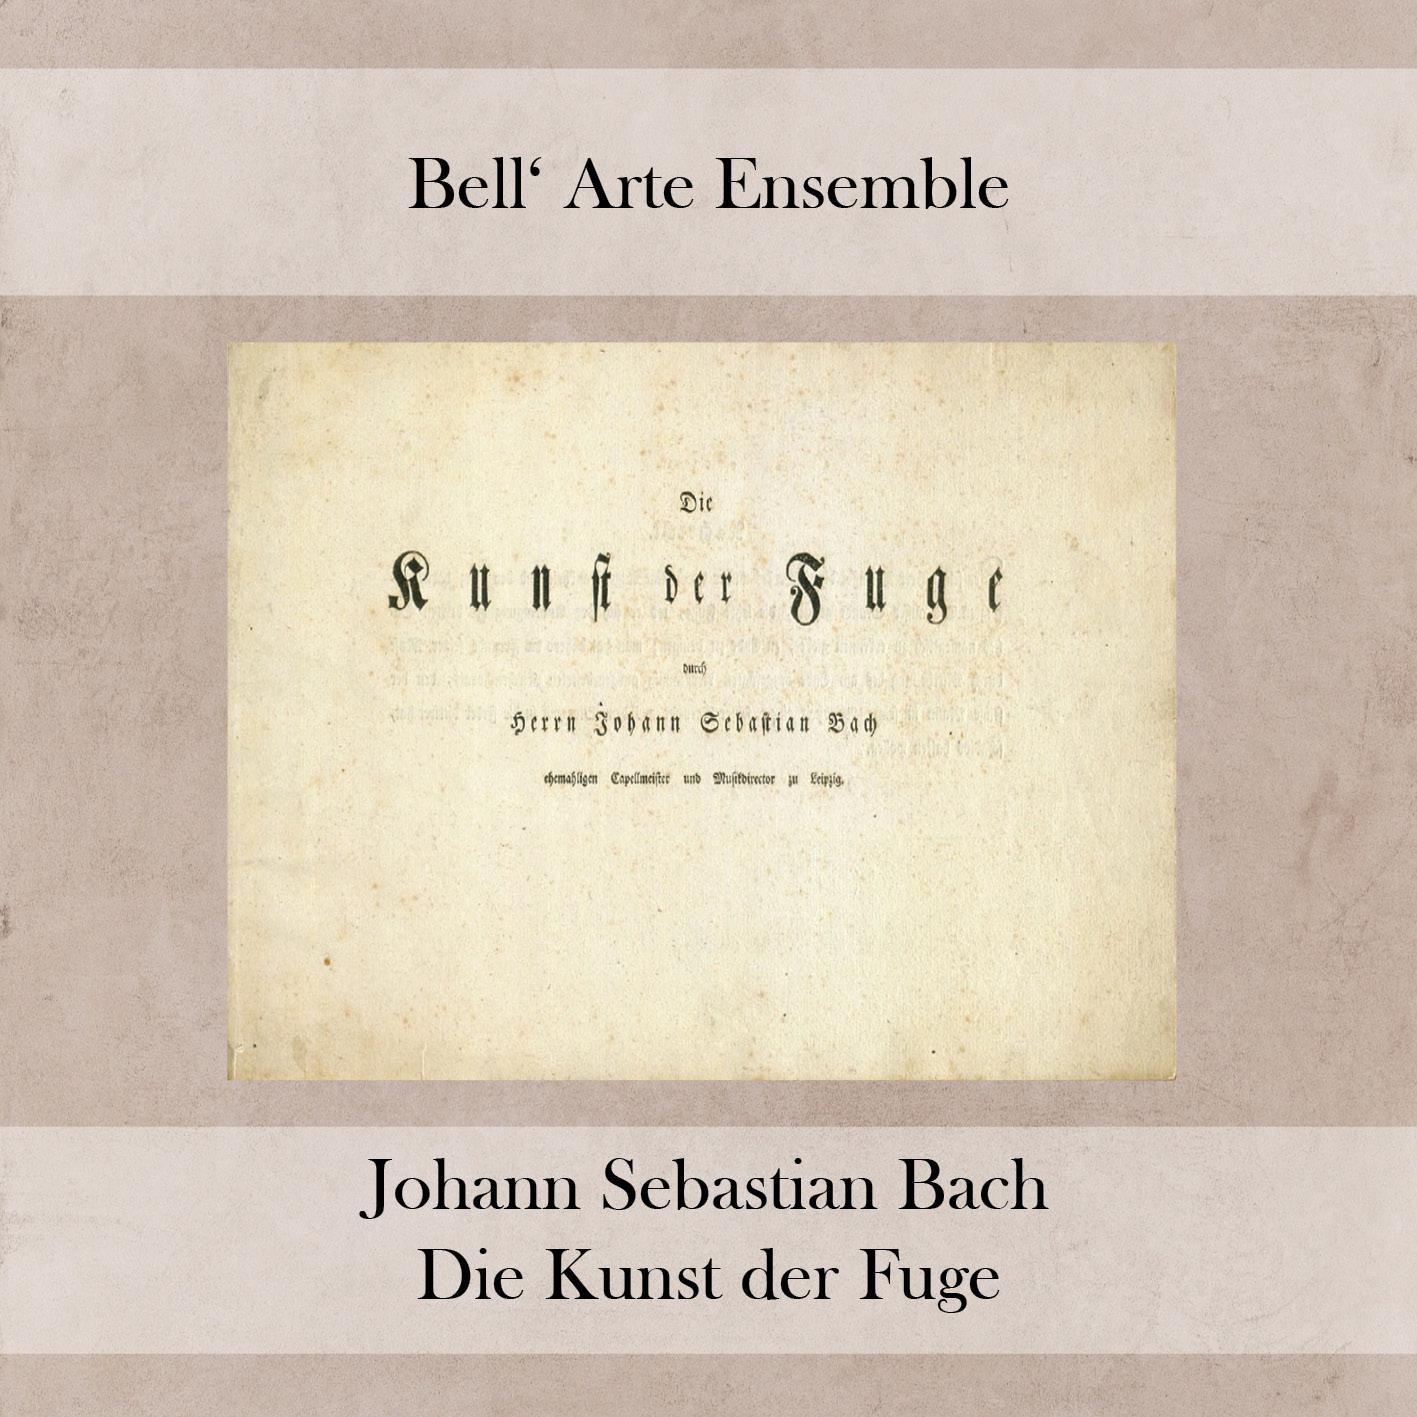 Die Kunst der Fuge in D Minor, BWV 1080:VII. Contrapunctus 7 a 4 per Augment et Diminut